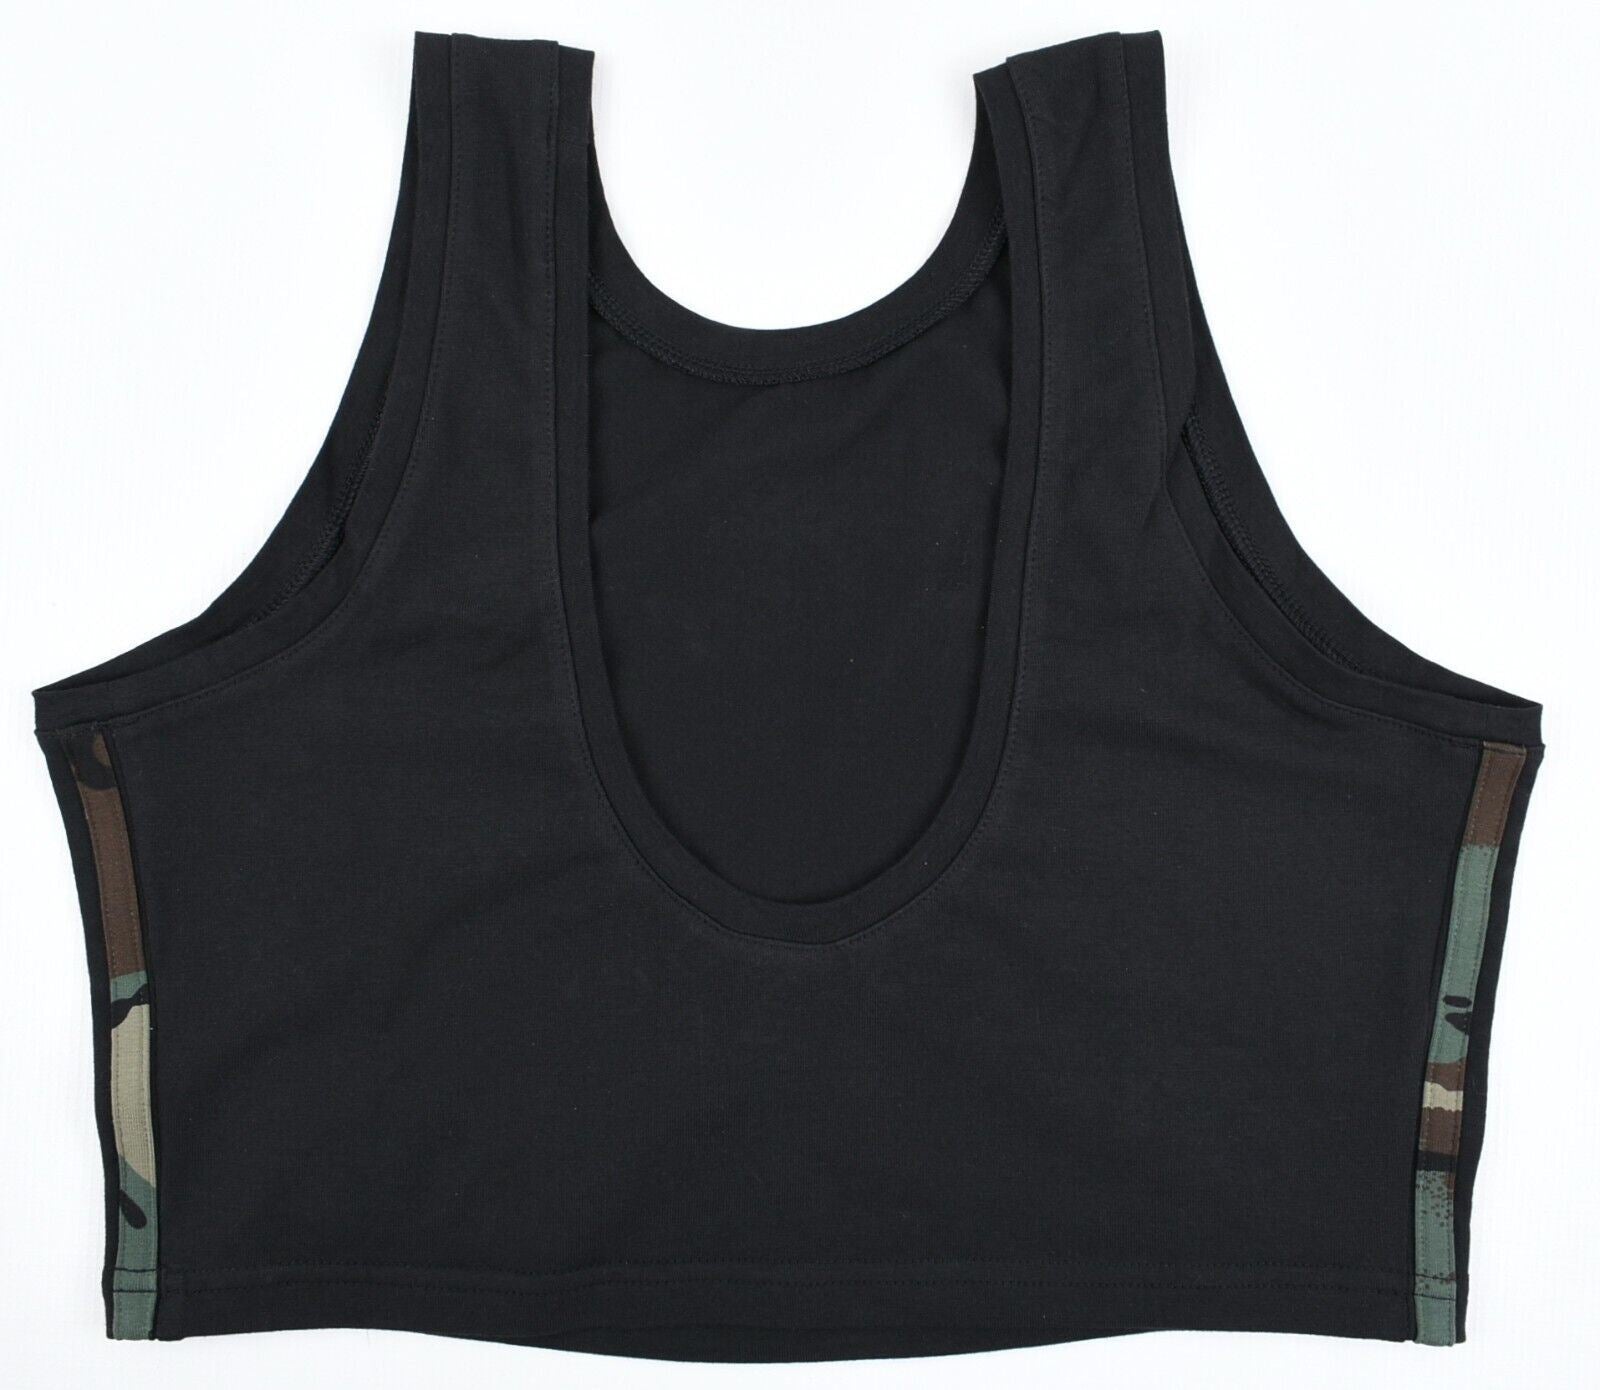 ADIDAS Activewear Women's Crop Top, Black/Camouflage, size L (UK 16-18)